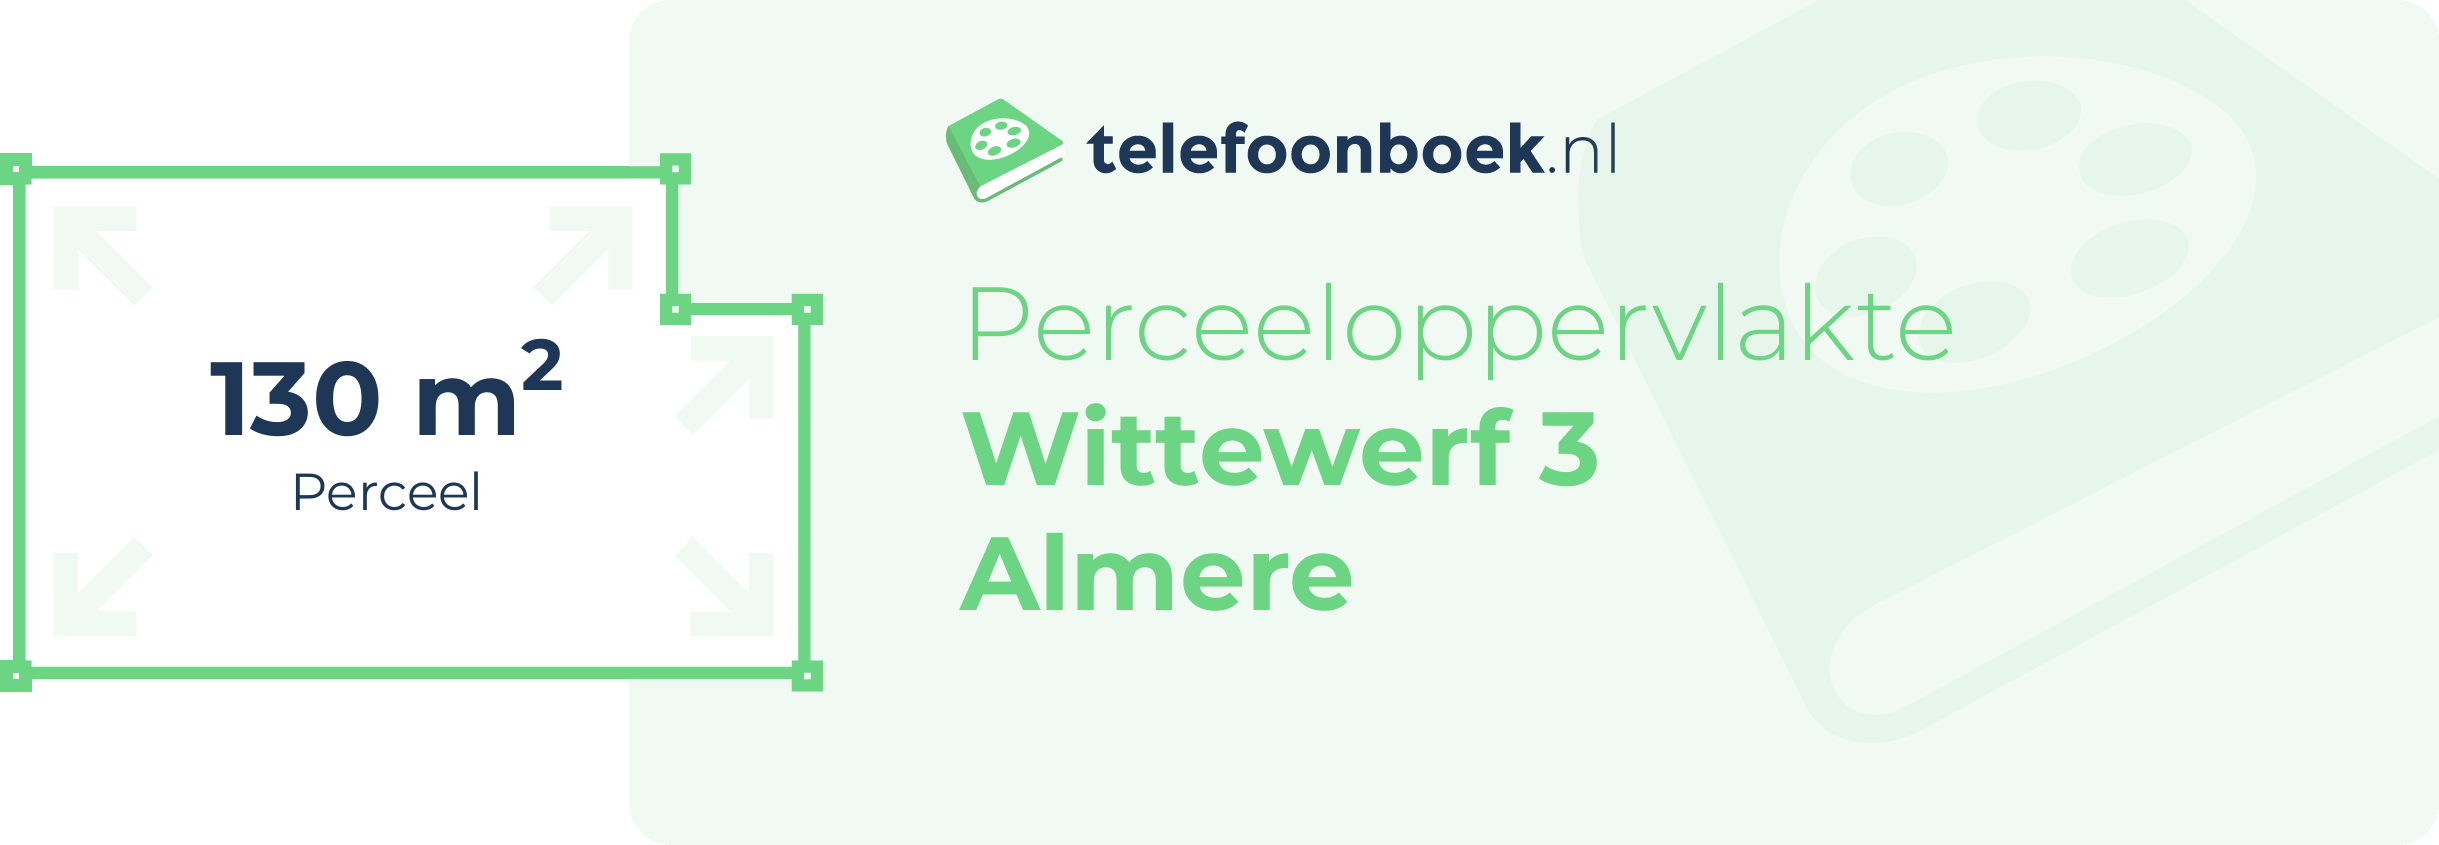 Perceeloppervlakte Wittewerf 3 Almere